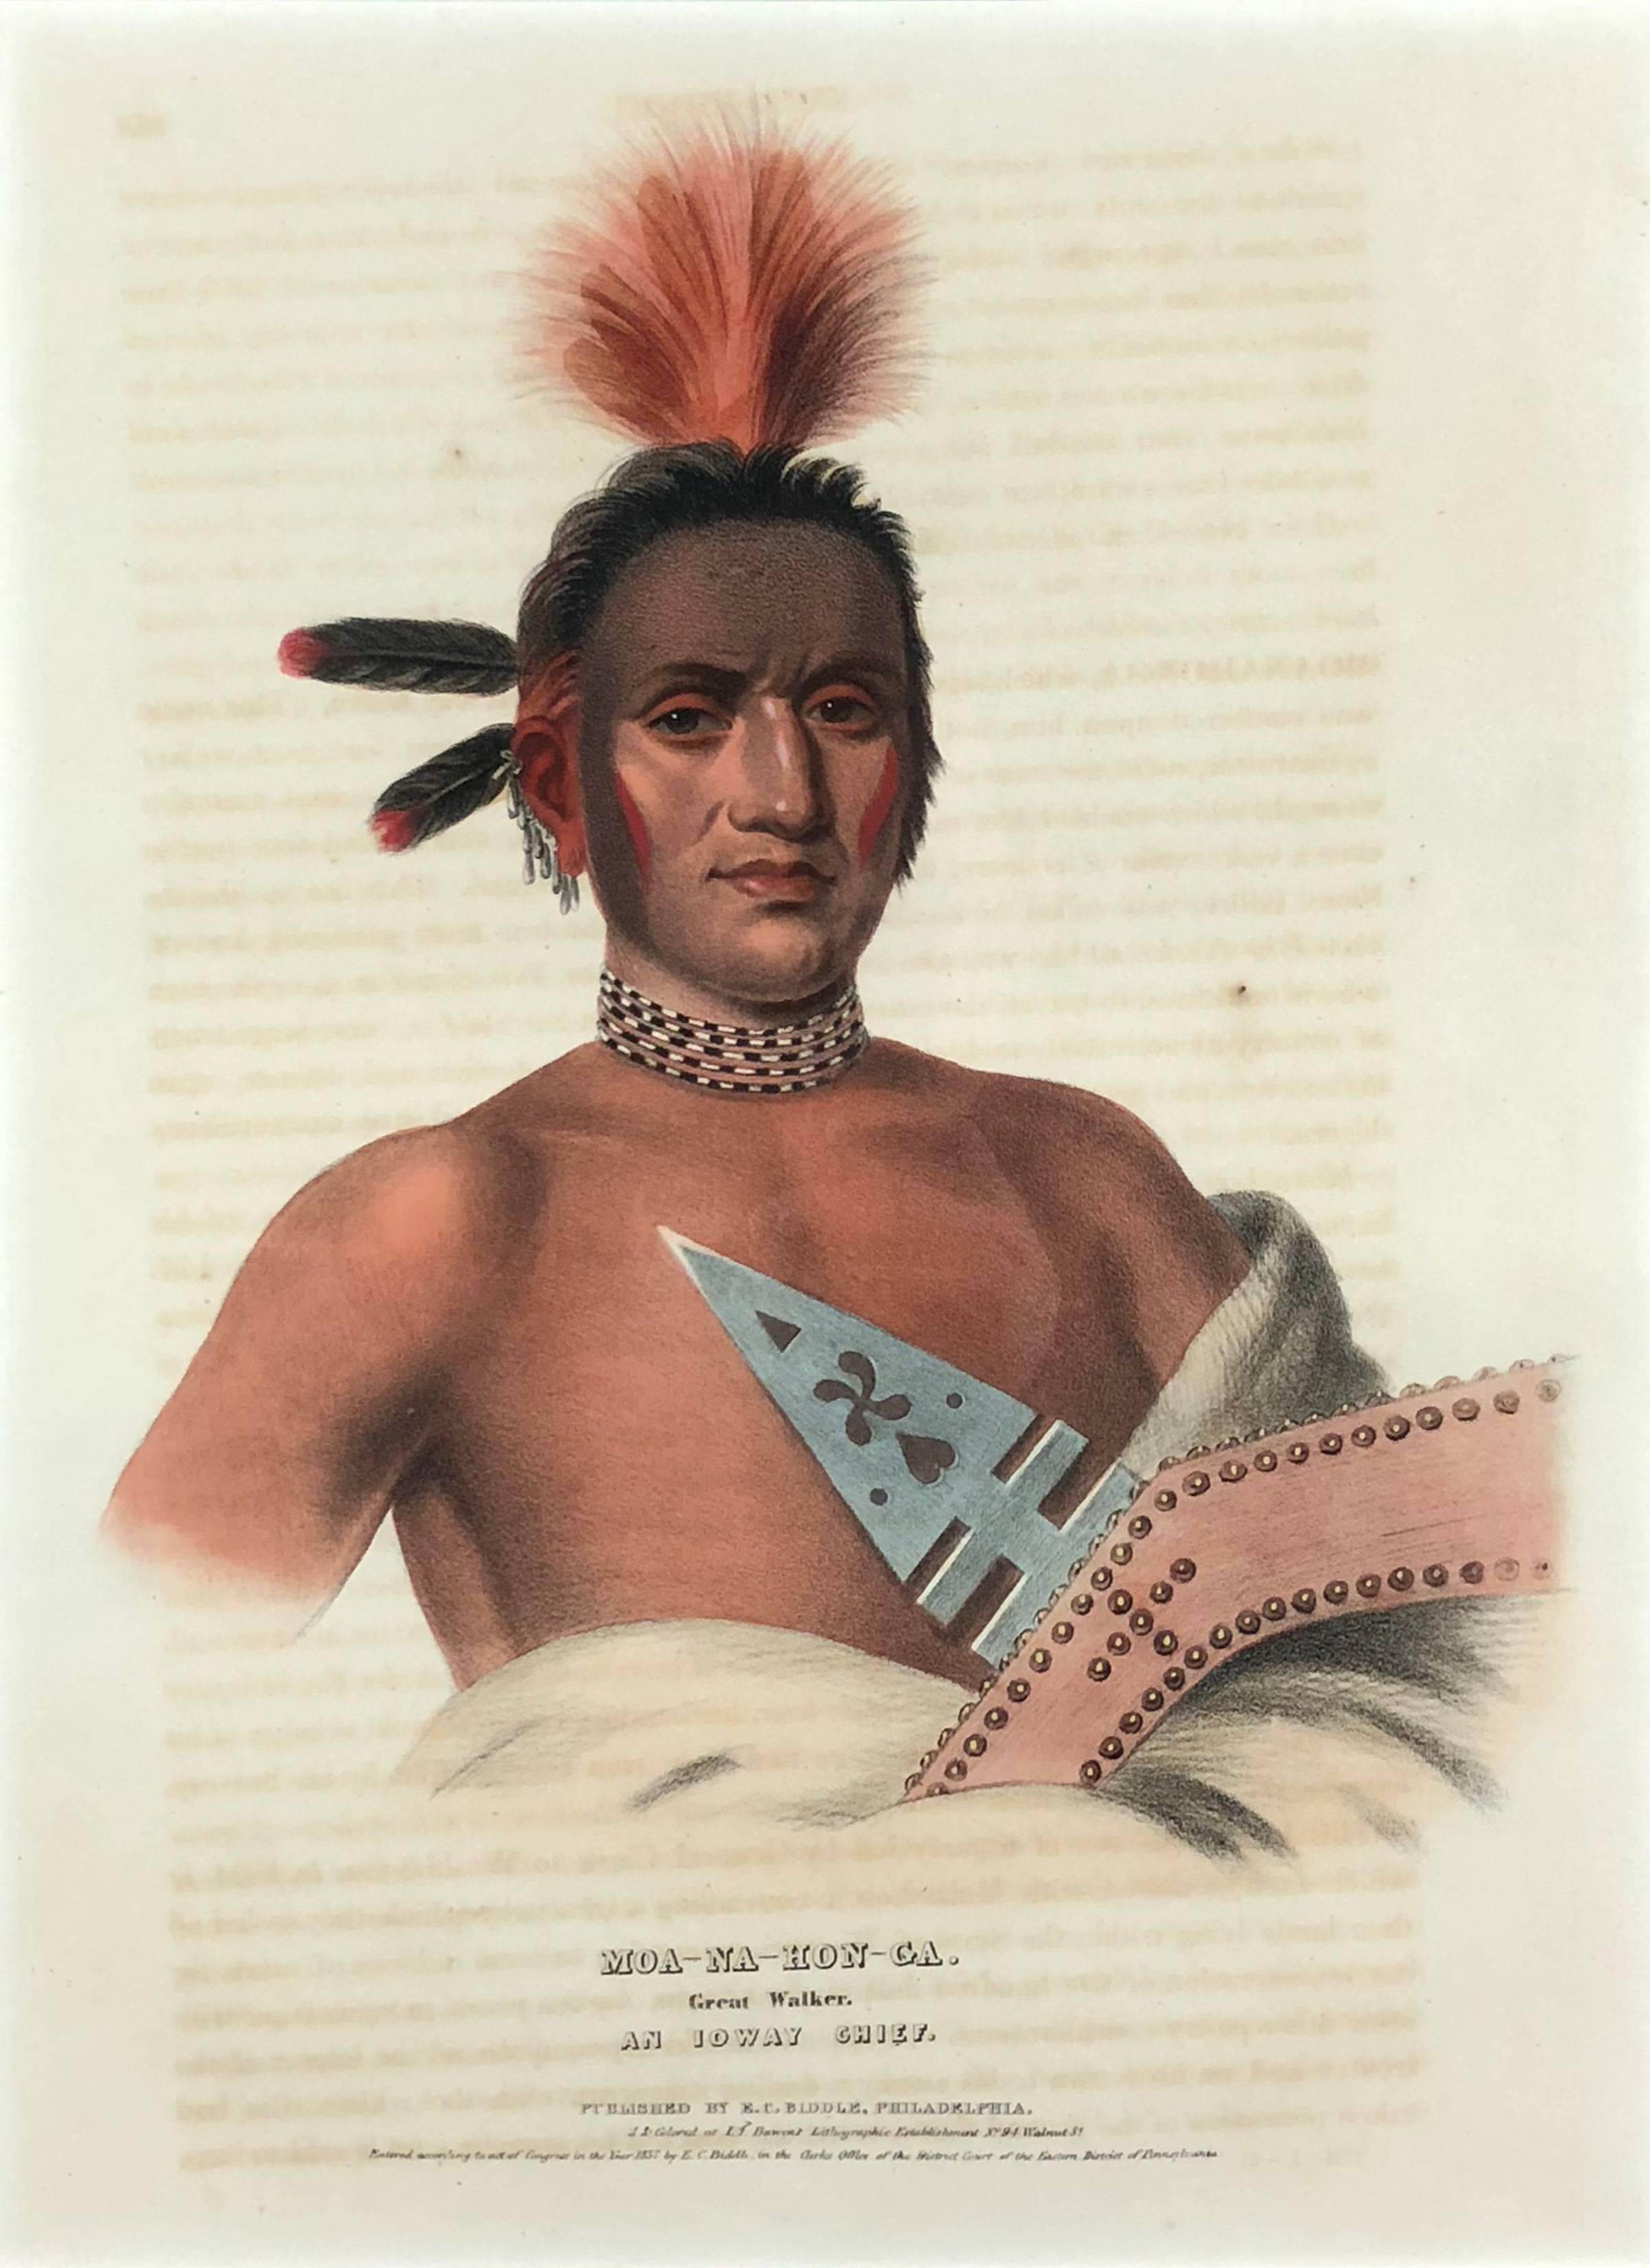 Moa-Na-Hon-Ga, Great Walker, An Ioway Chief